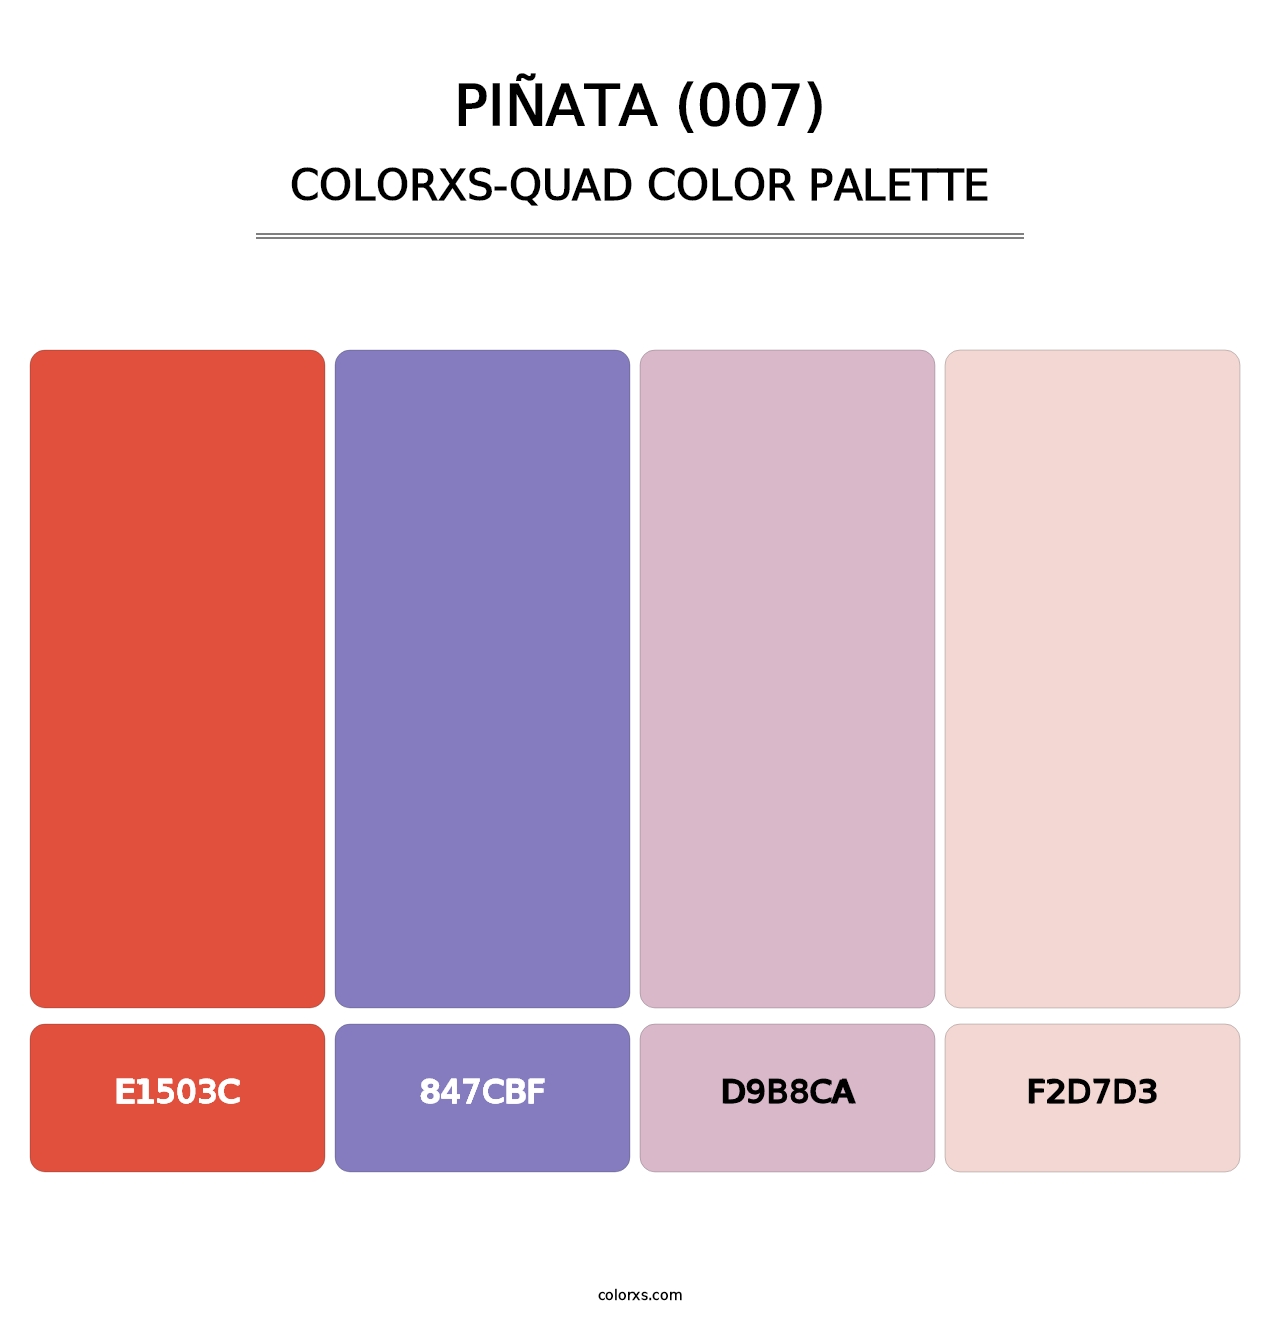 Piñata (007) - Colorxs Quad Palette